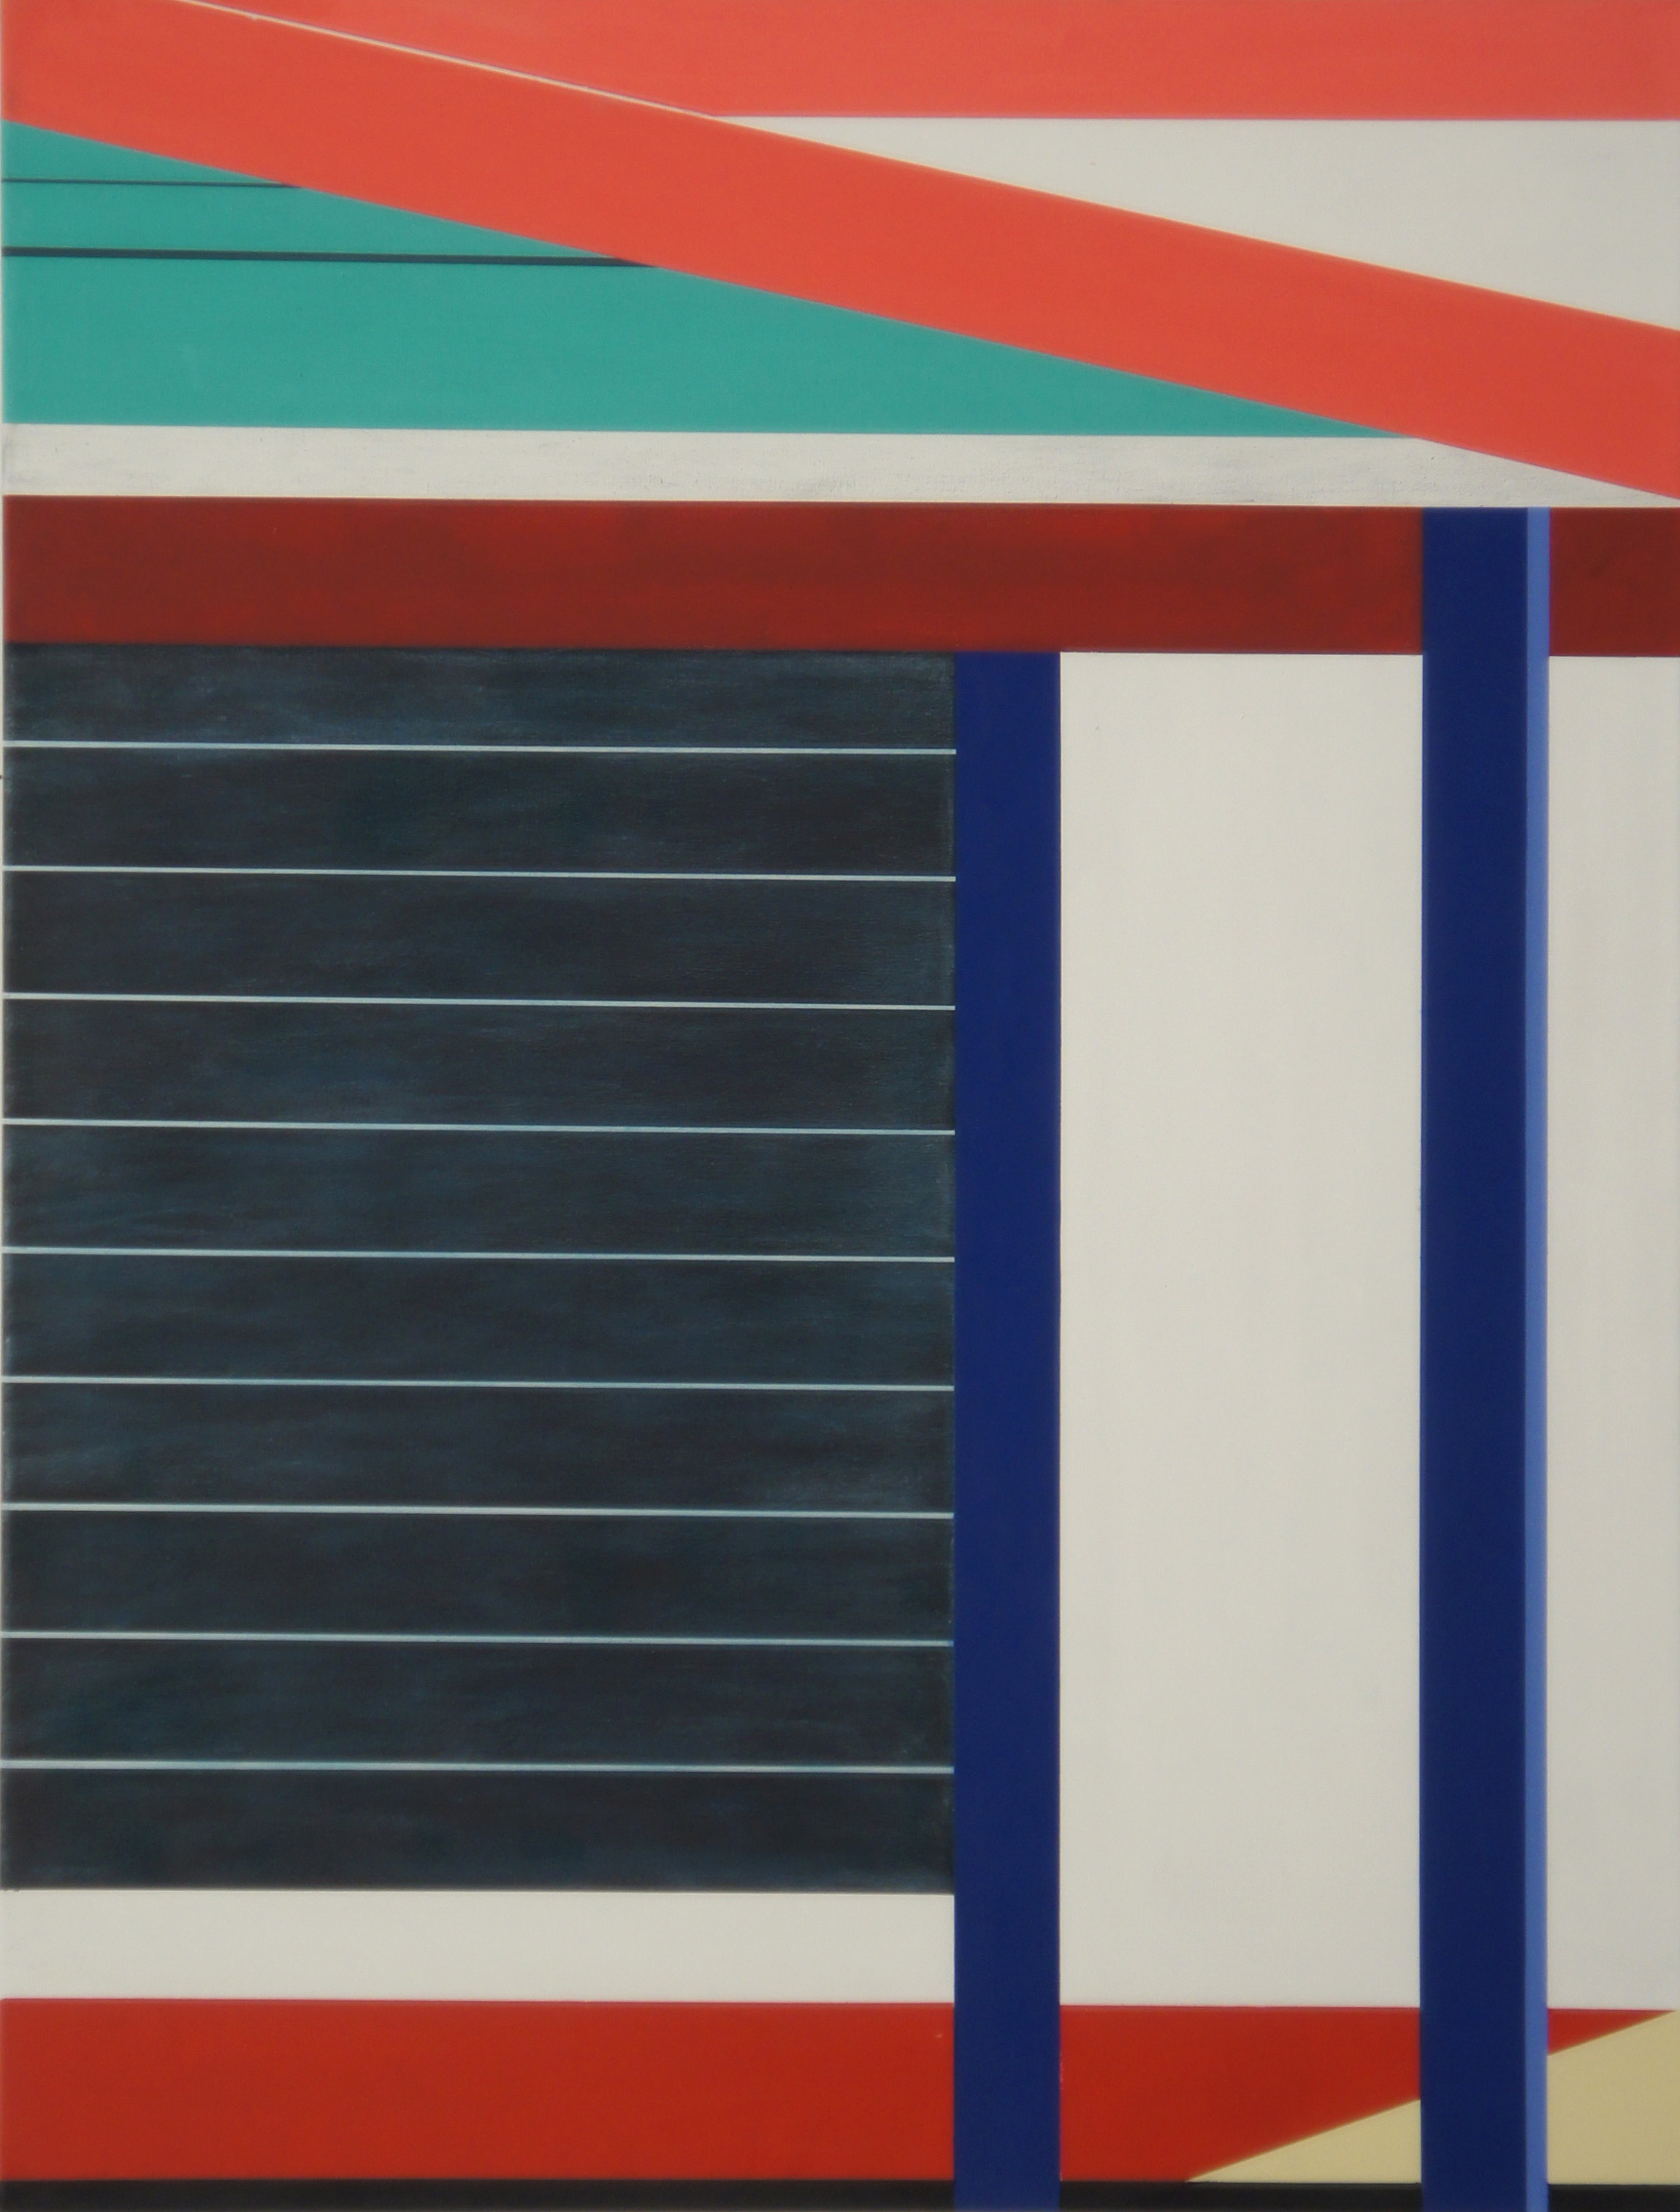 Farben der Südsee III, 105 x 80 cm, 2011, Ölfarbe auf Leinwand Colors of the South Sea III, 2011, 105 x 80 cm, Oil on canvas